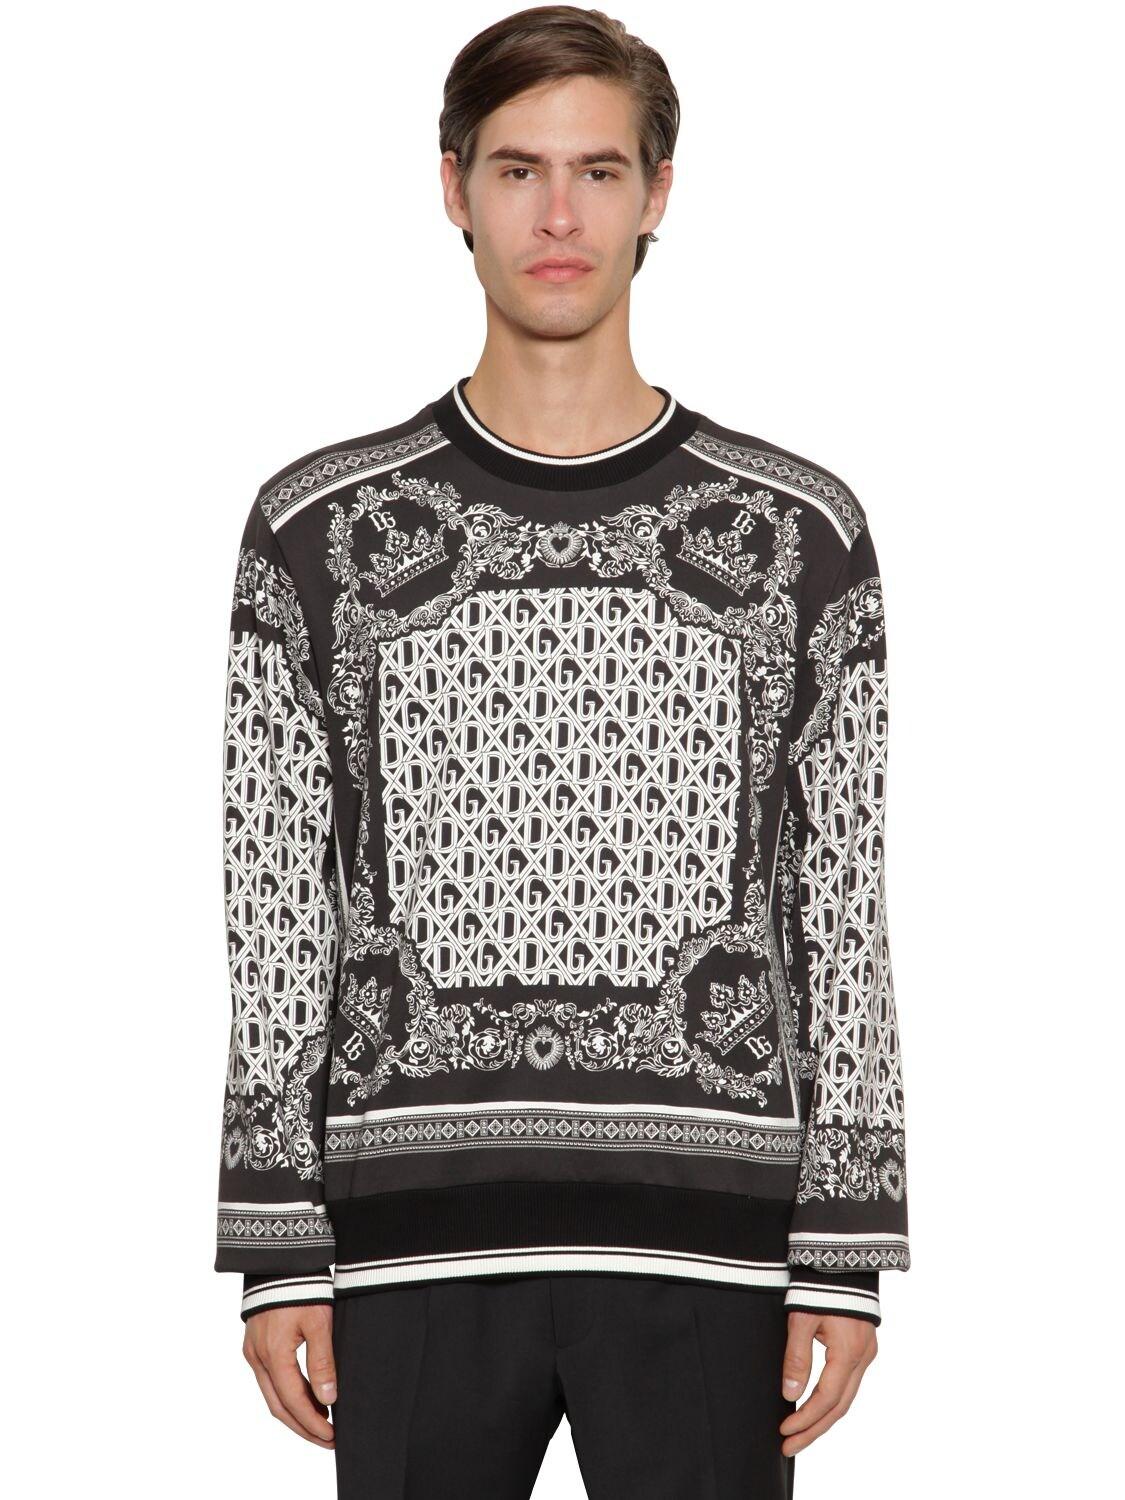 Dolce & Gabbana Bandana Printed Cotton Sweatshirt in Black/White (Black ...